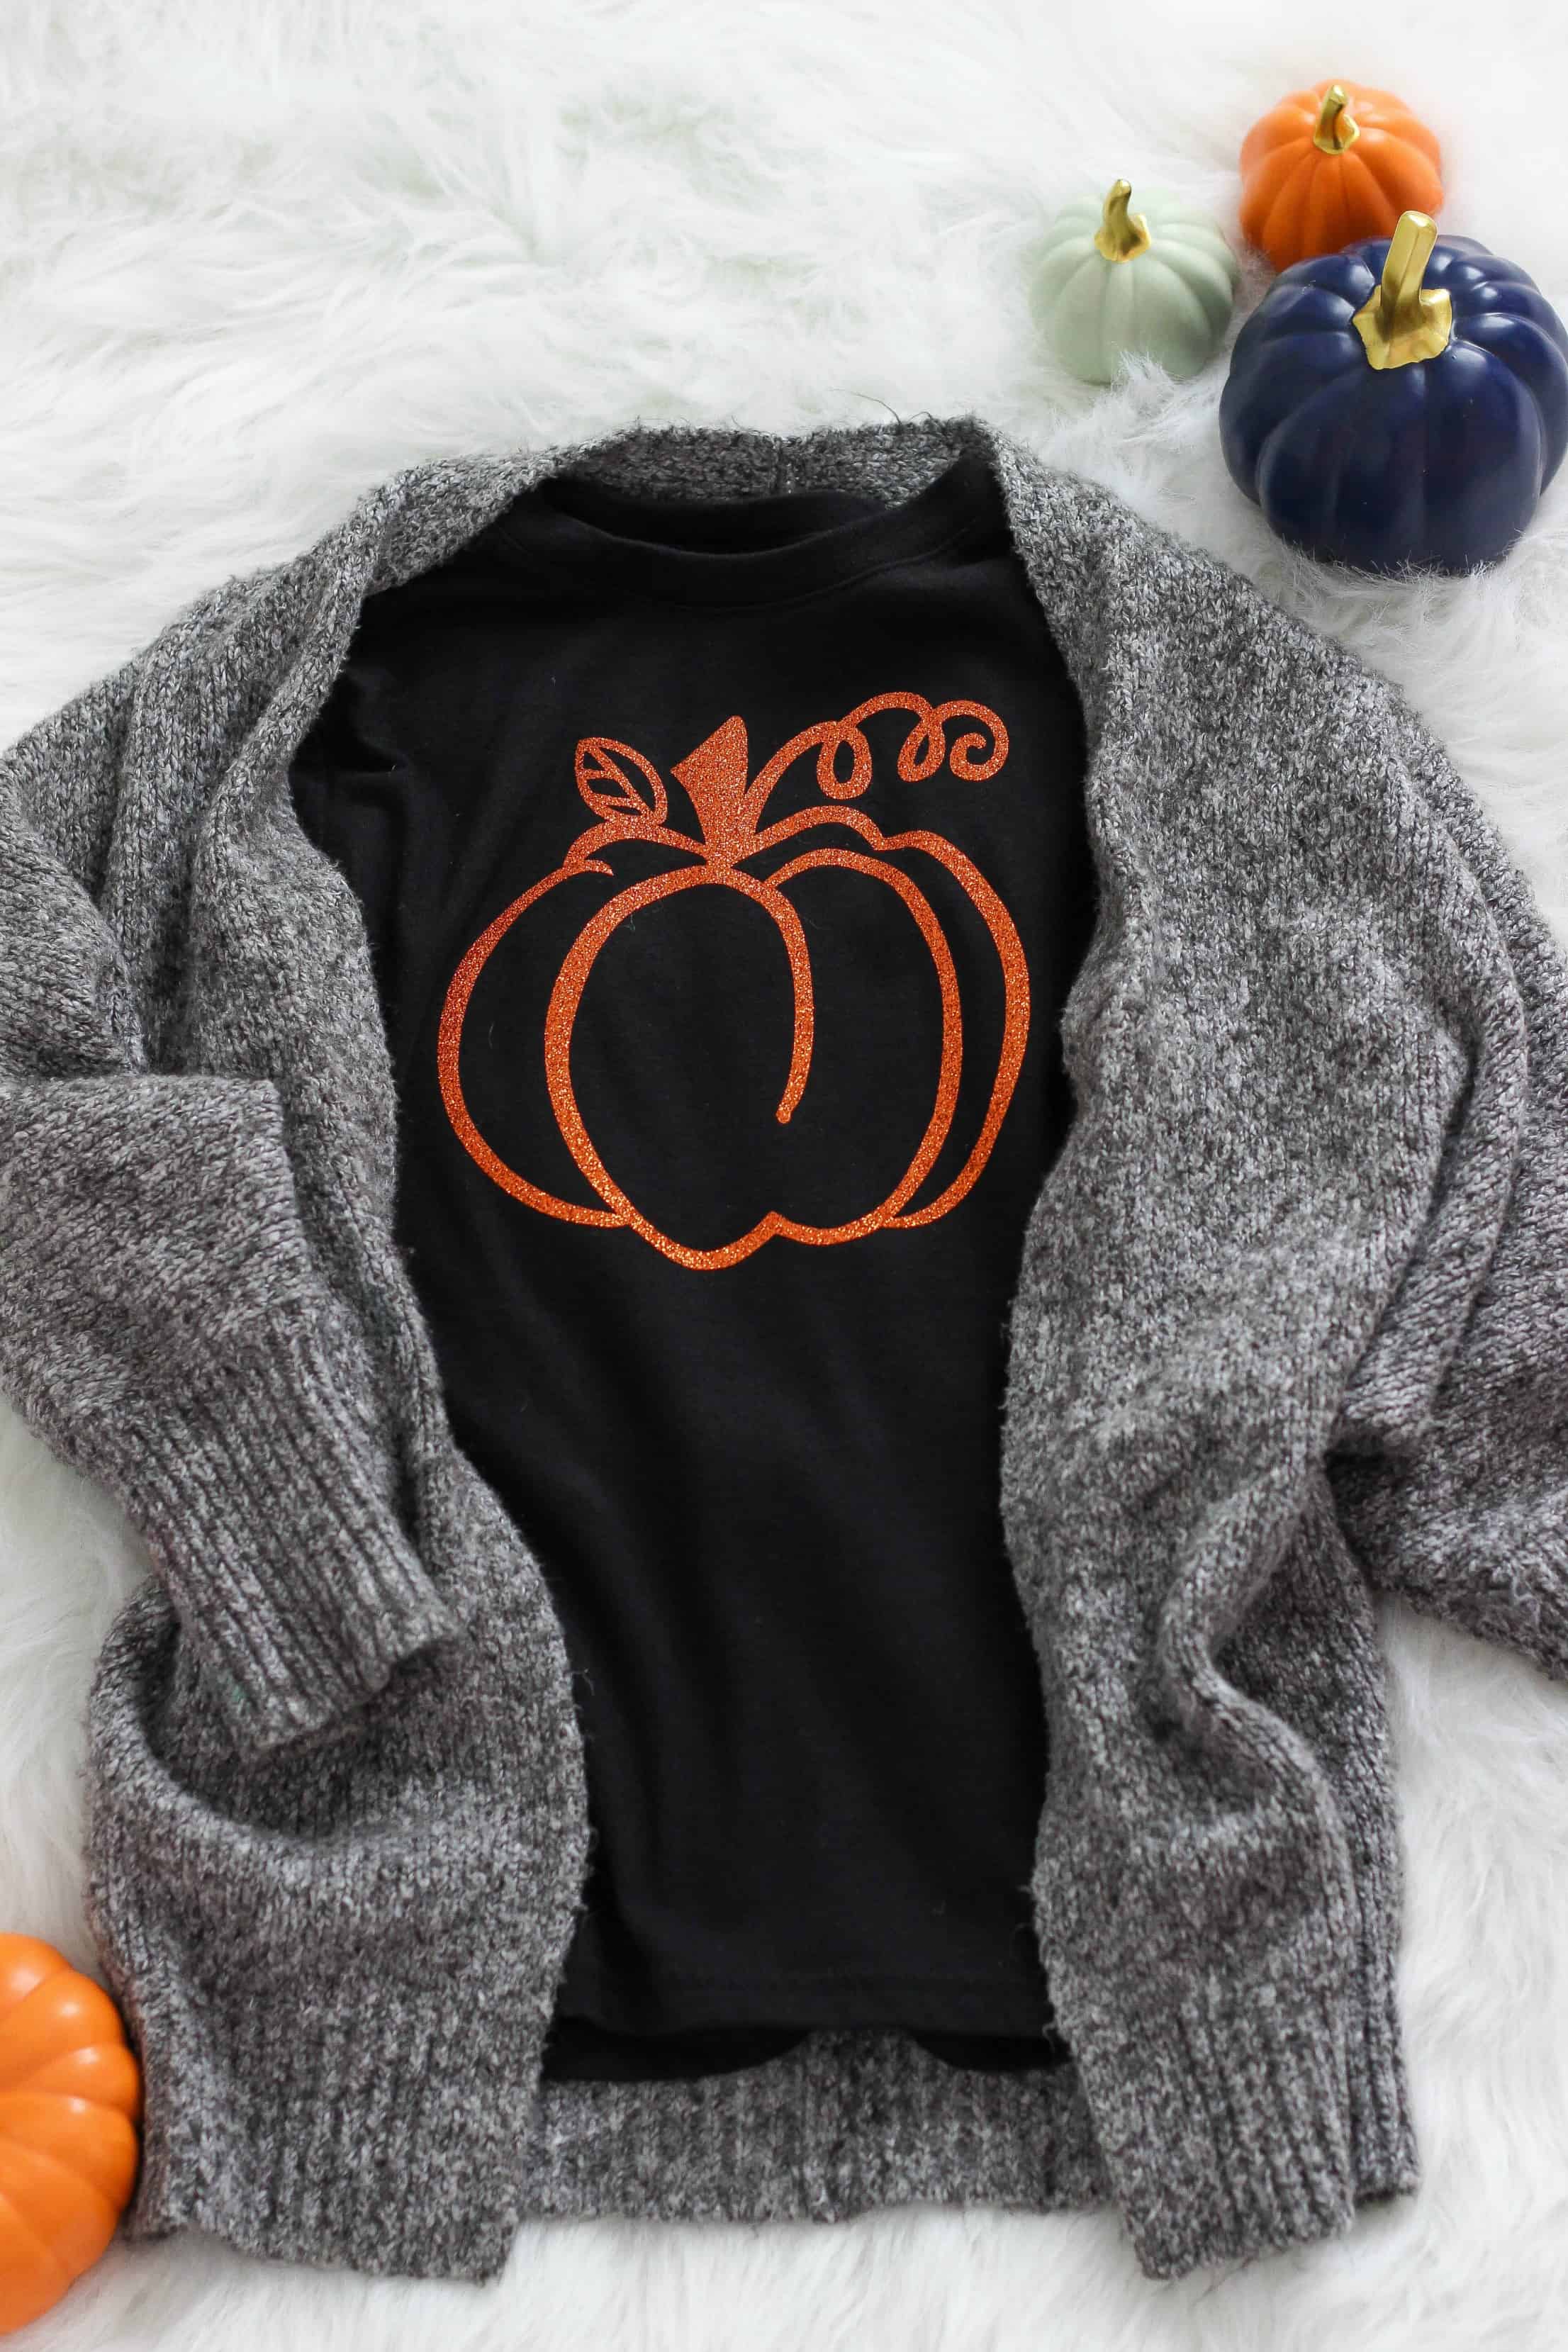 How To Make A Charming Pumpkin Iron-On Vinyl Shirt